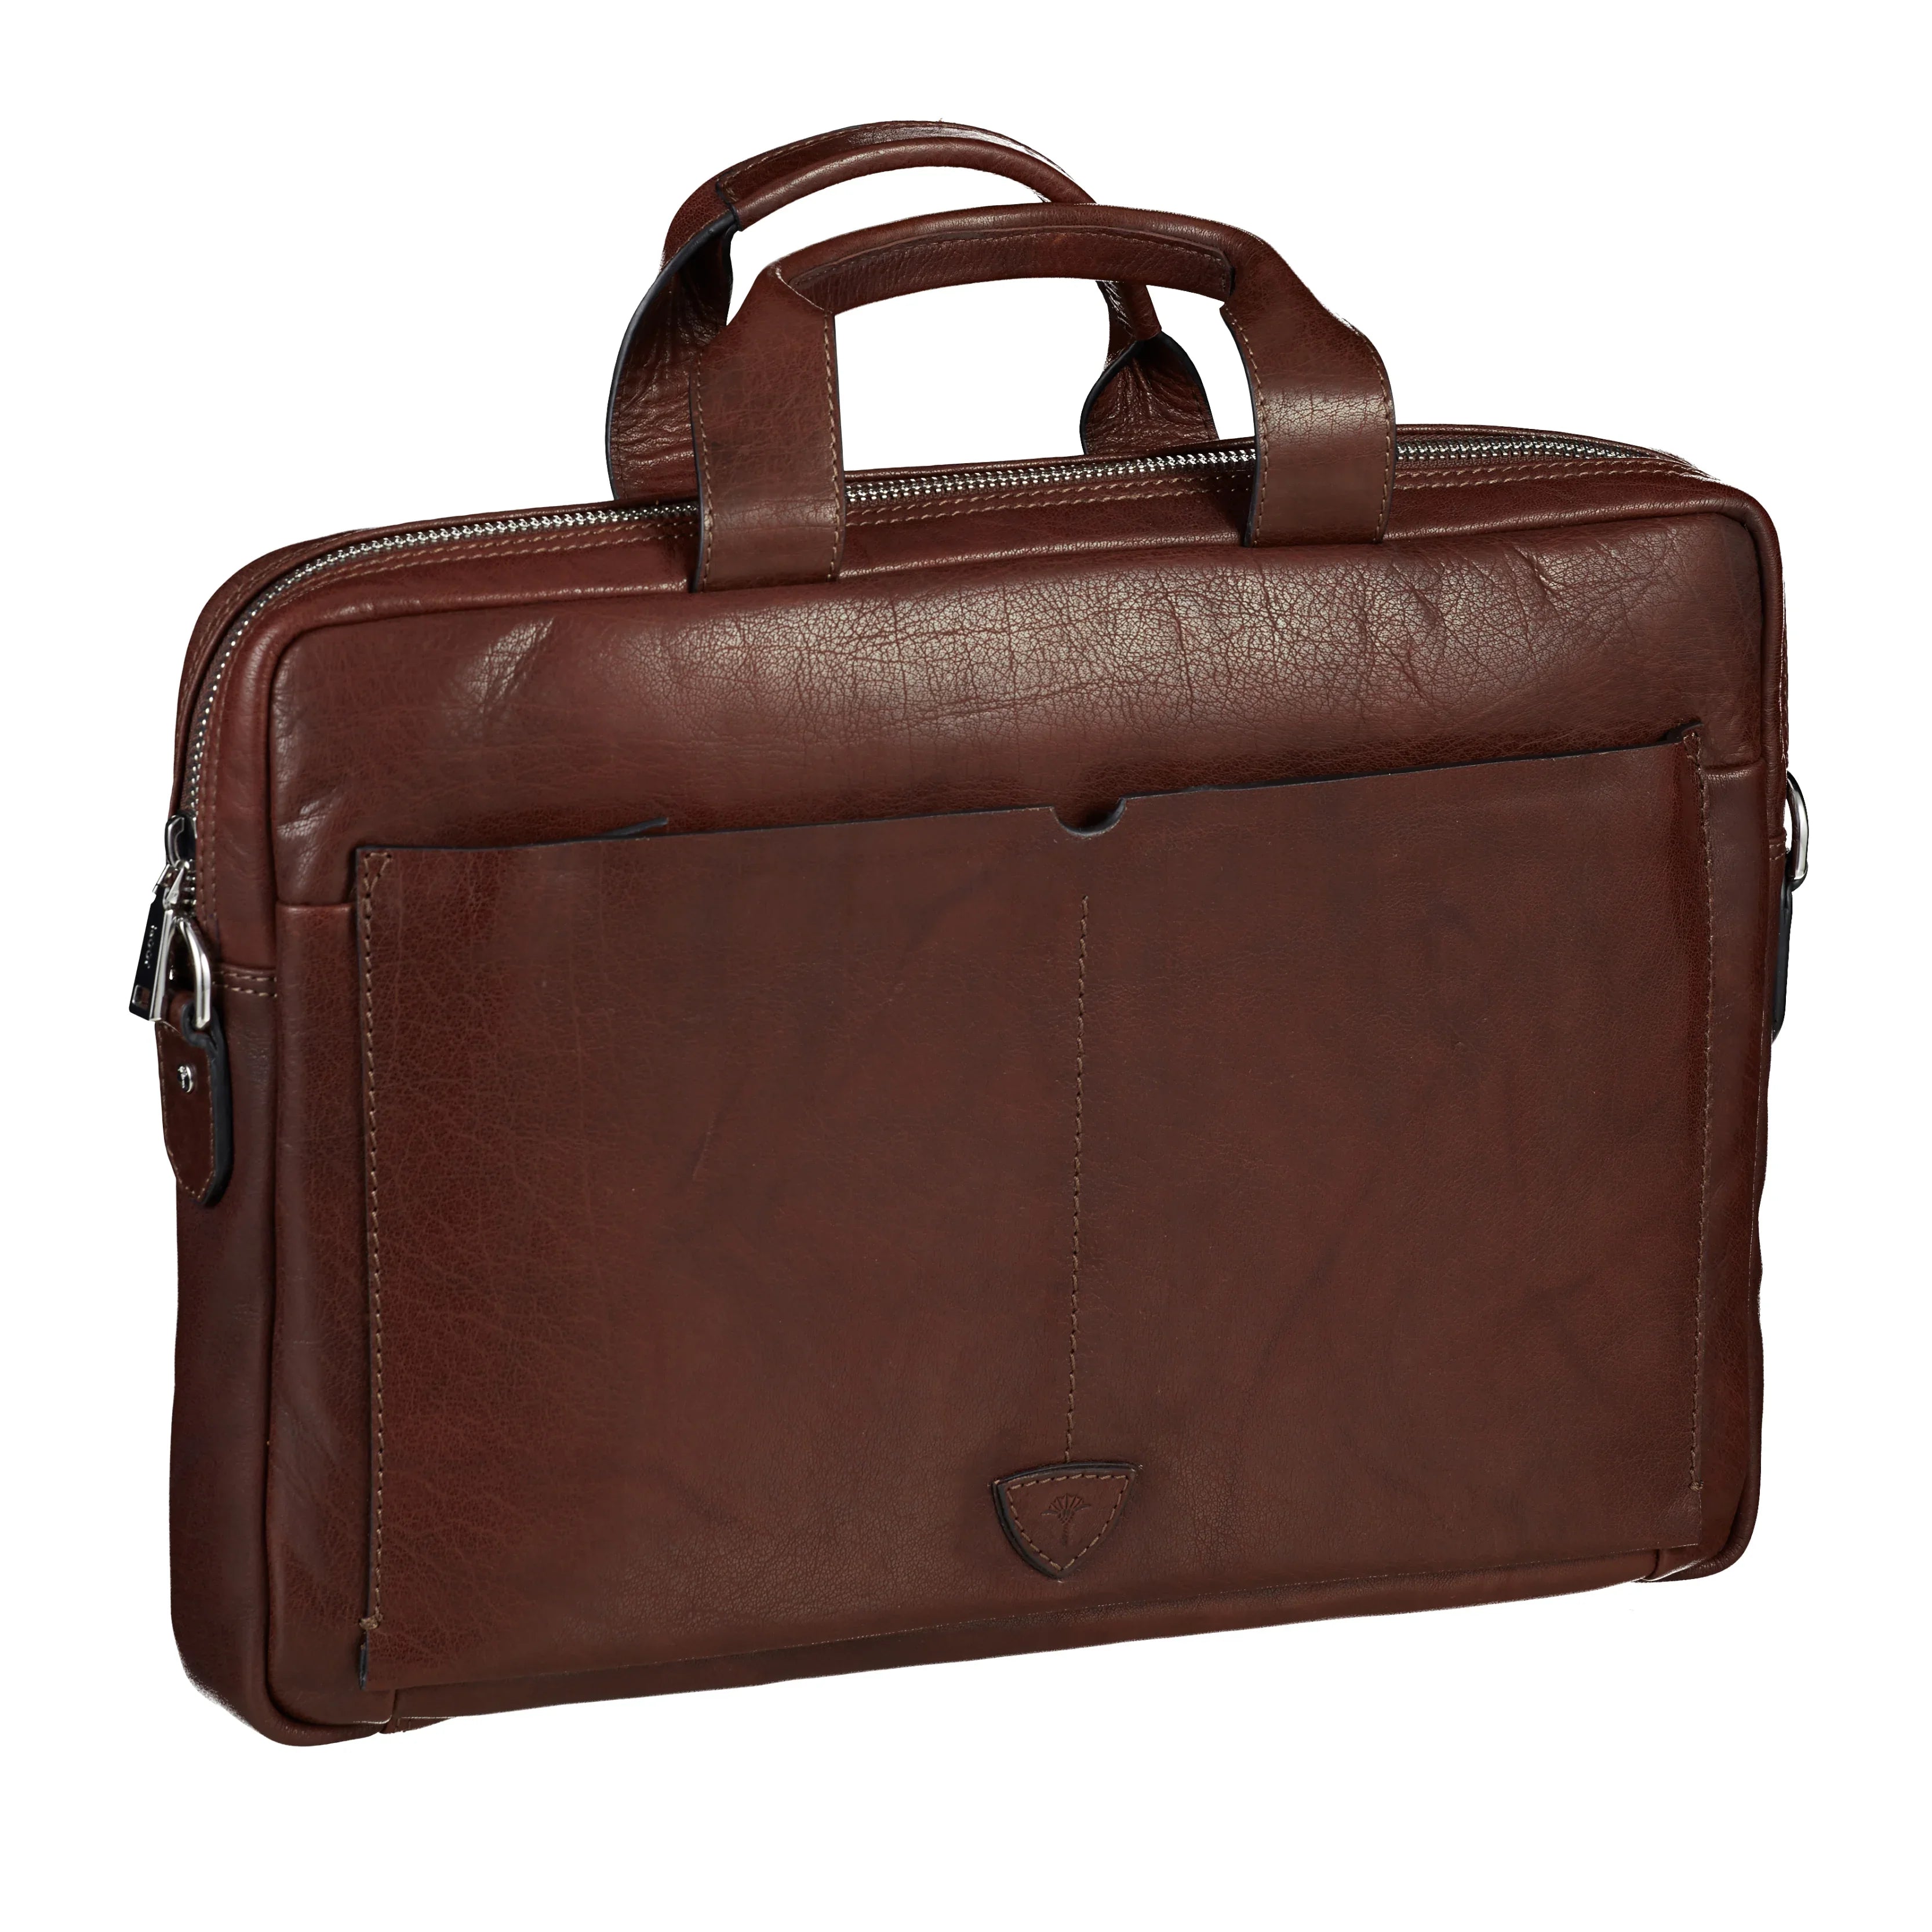 Joop Brenta Pandion business bag 44 cm - dark brown